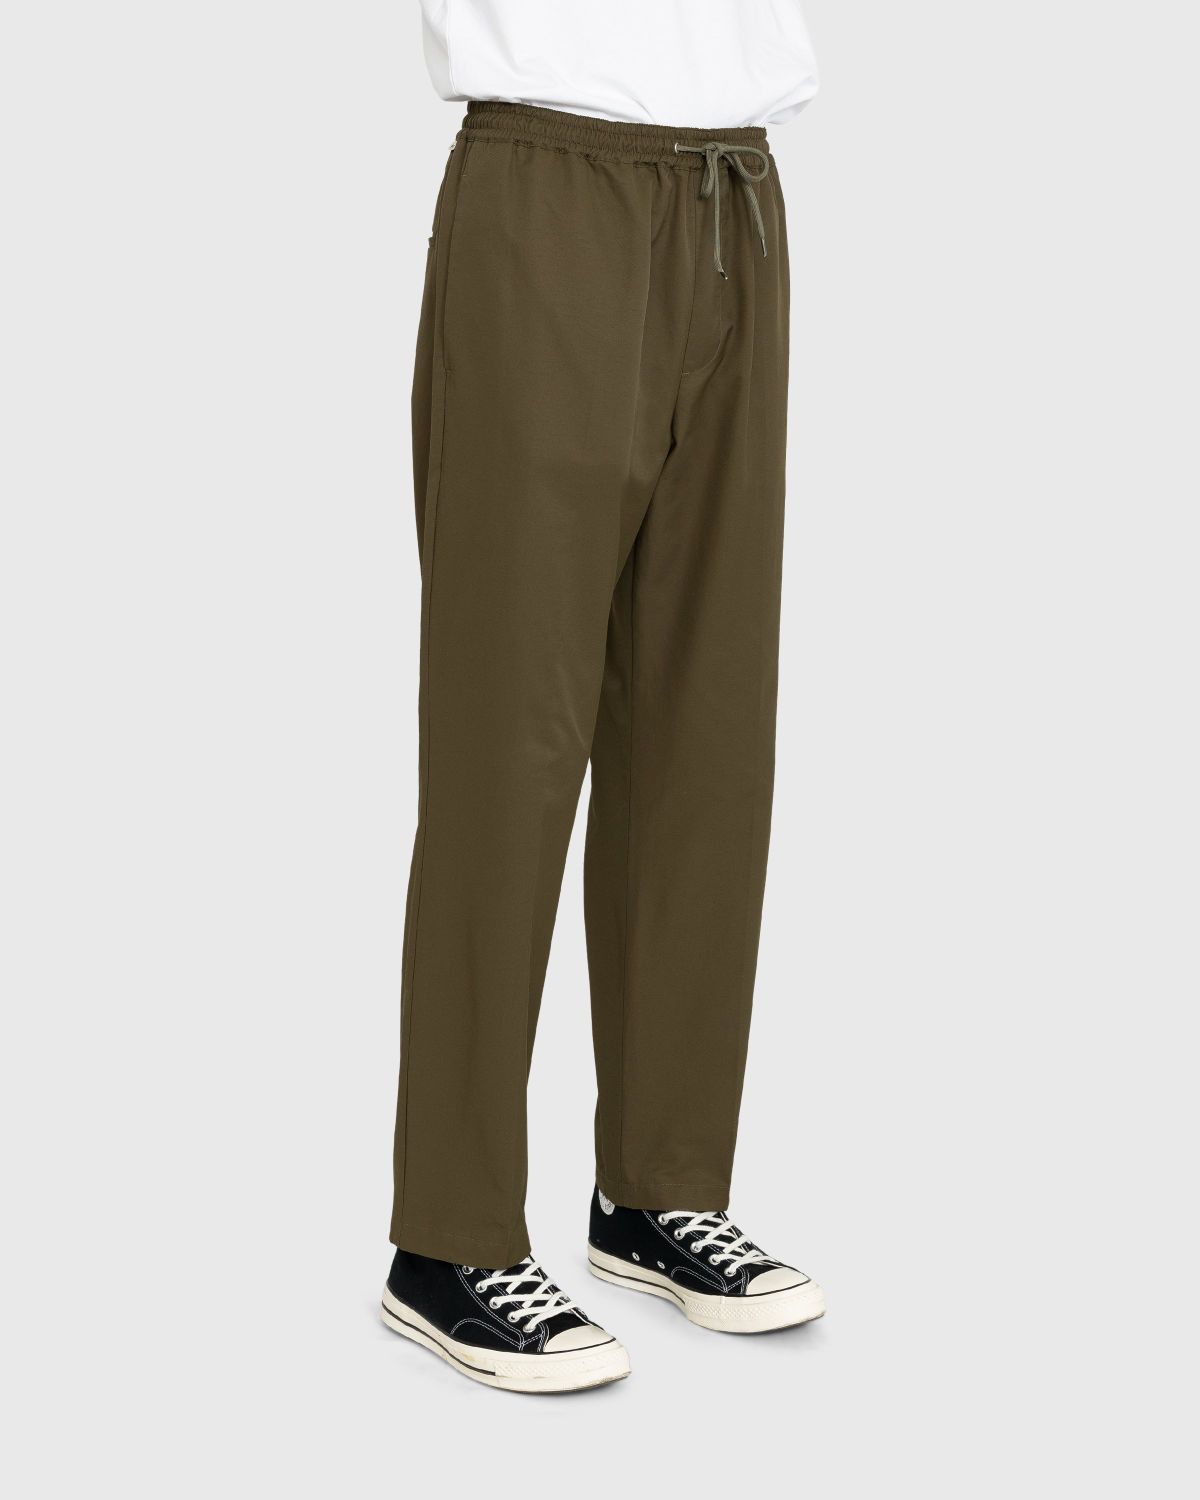 Highsnobiety – Cotton Nylon Elastic Pants Olive - Trousers - Green - Image 2